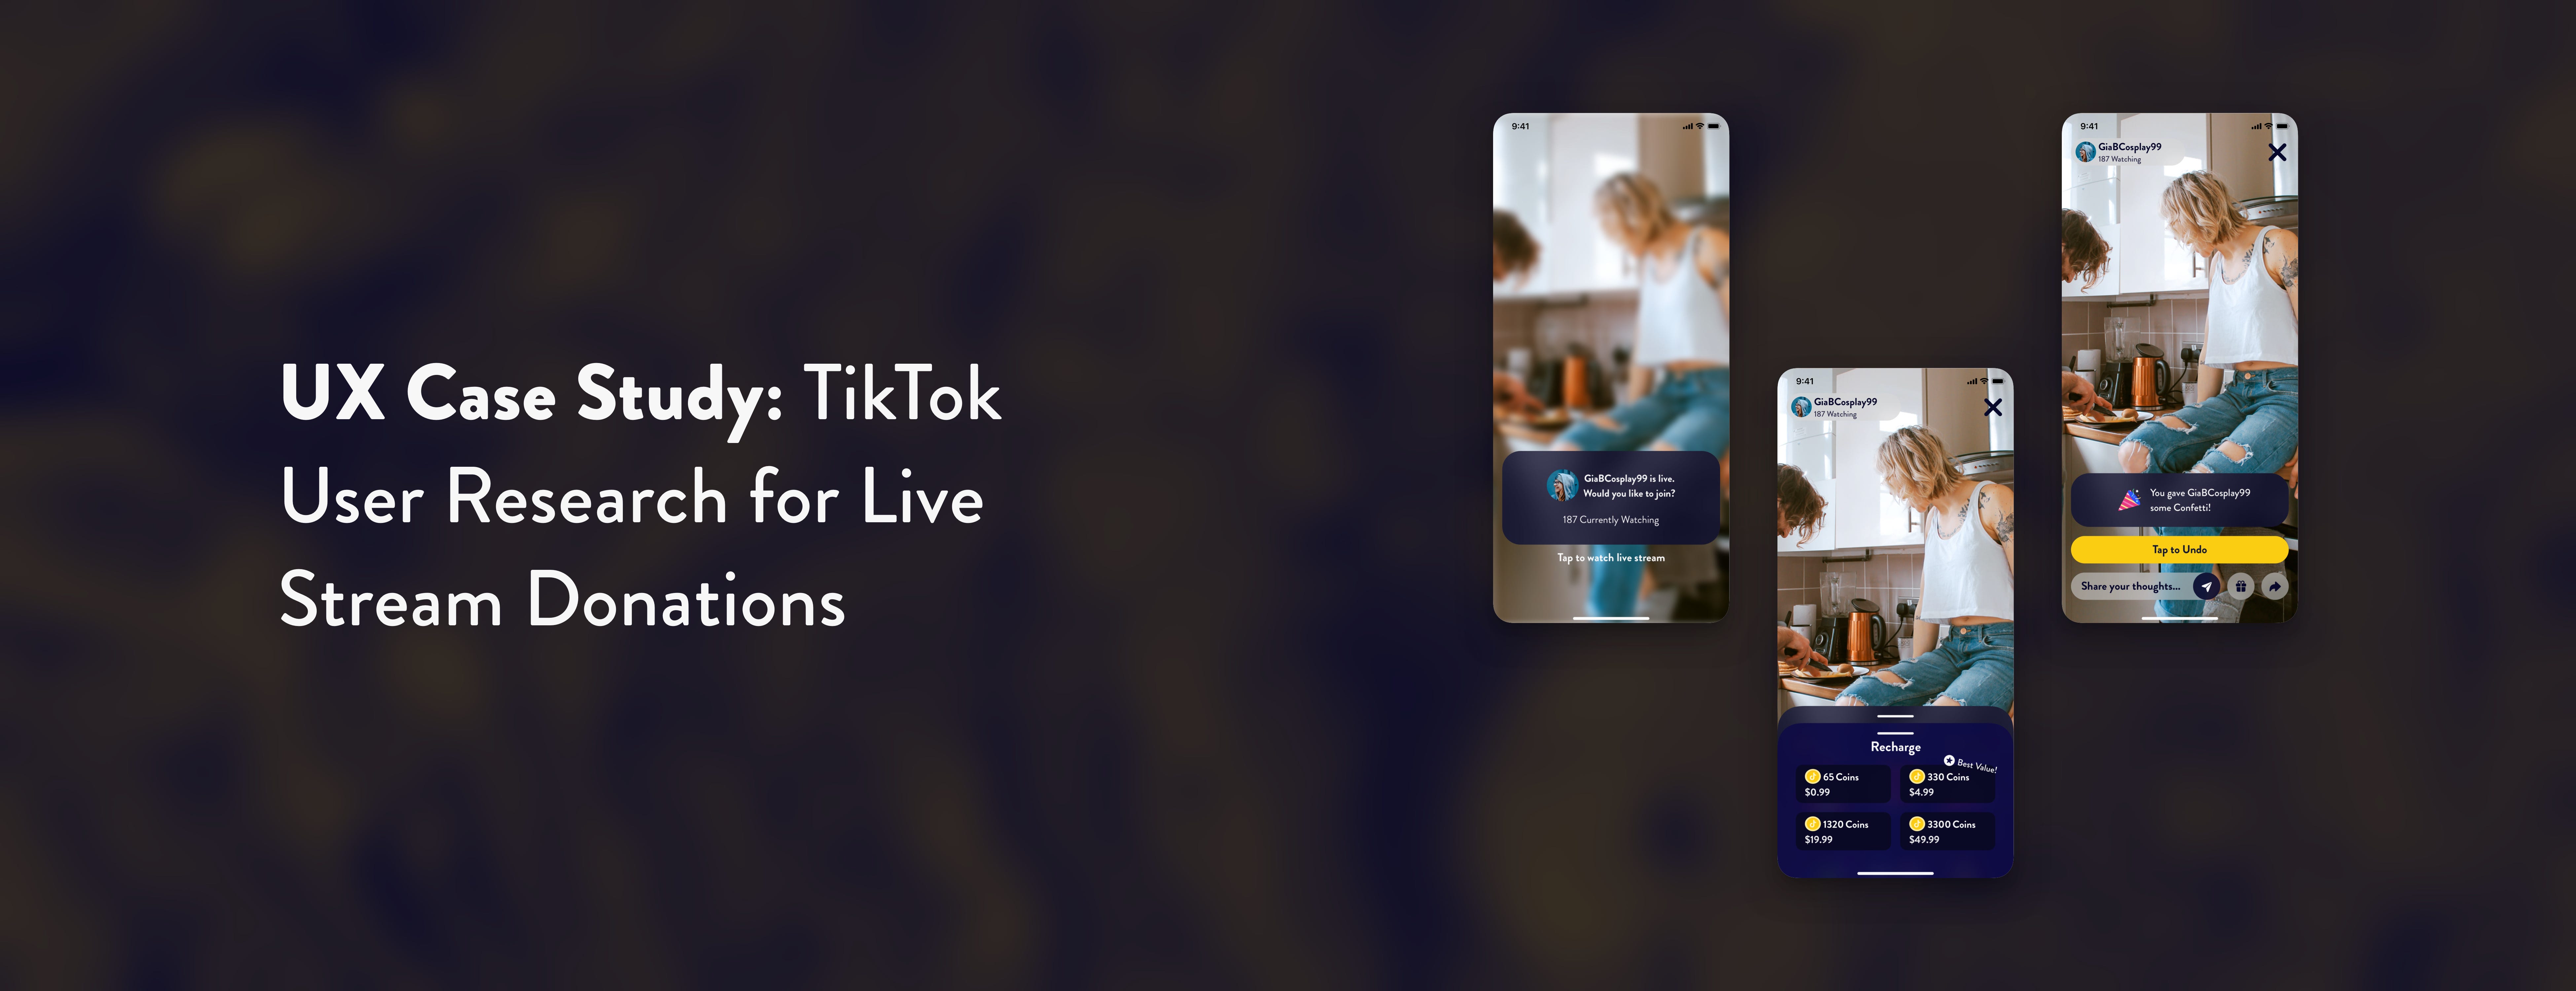 UX Case Study TikTok User Research for Live Stream Donations by Shawn Wydra Medium